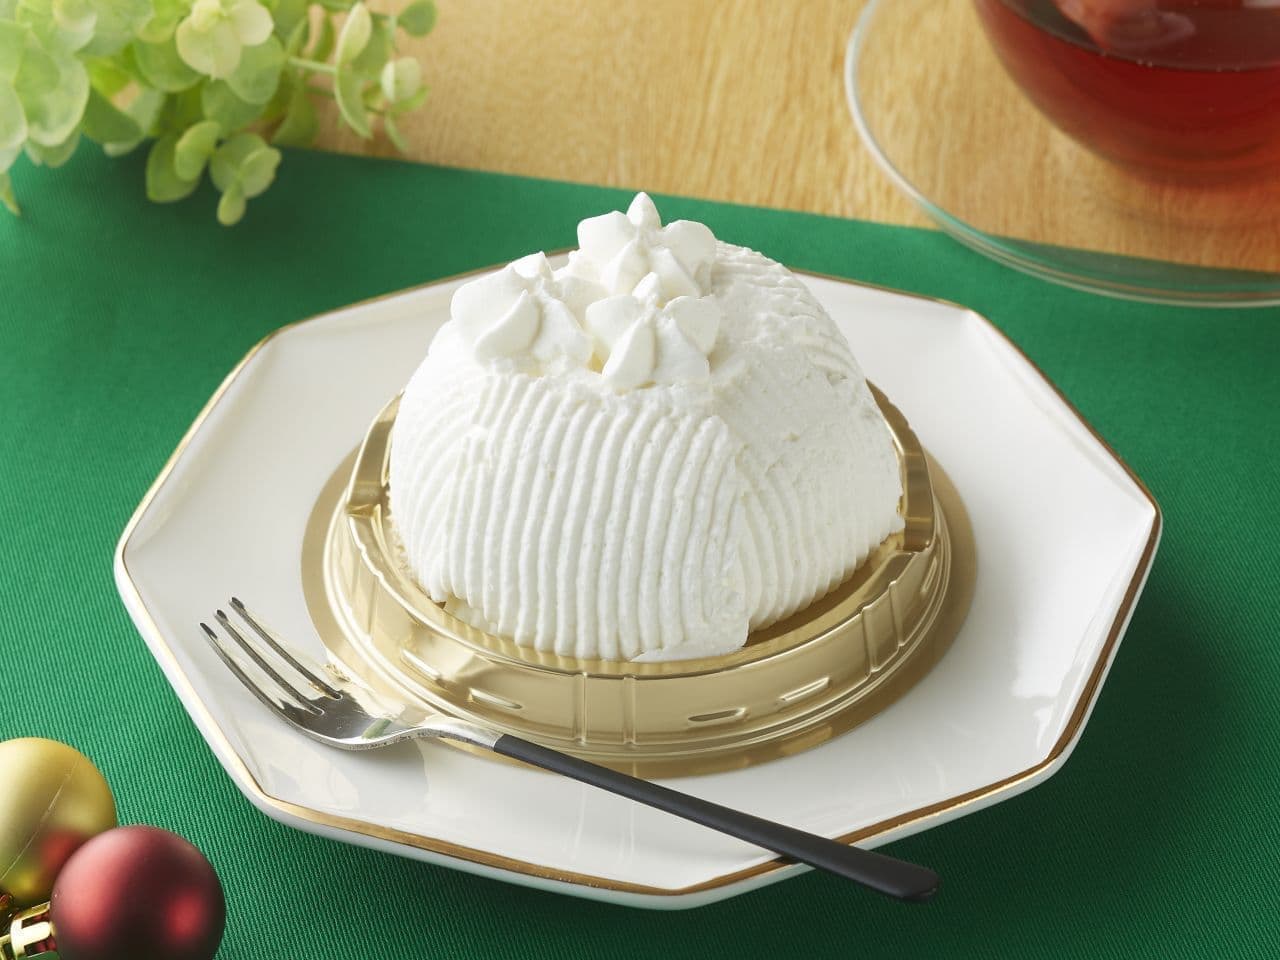 Ministop "Grand Around Chestnut Pure White Cake"